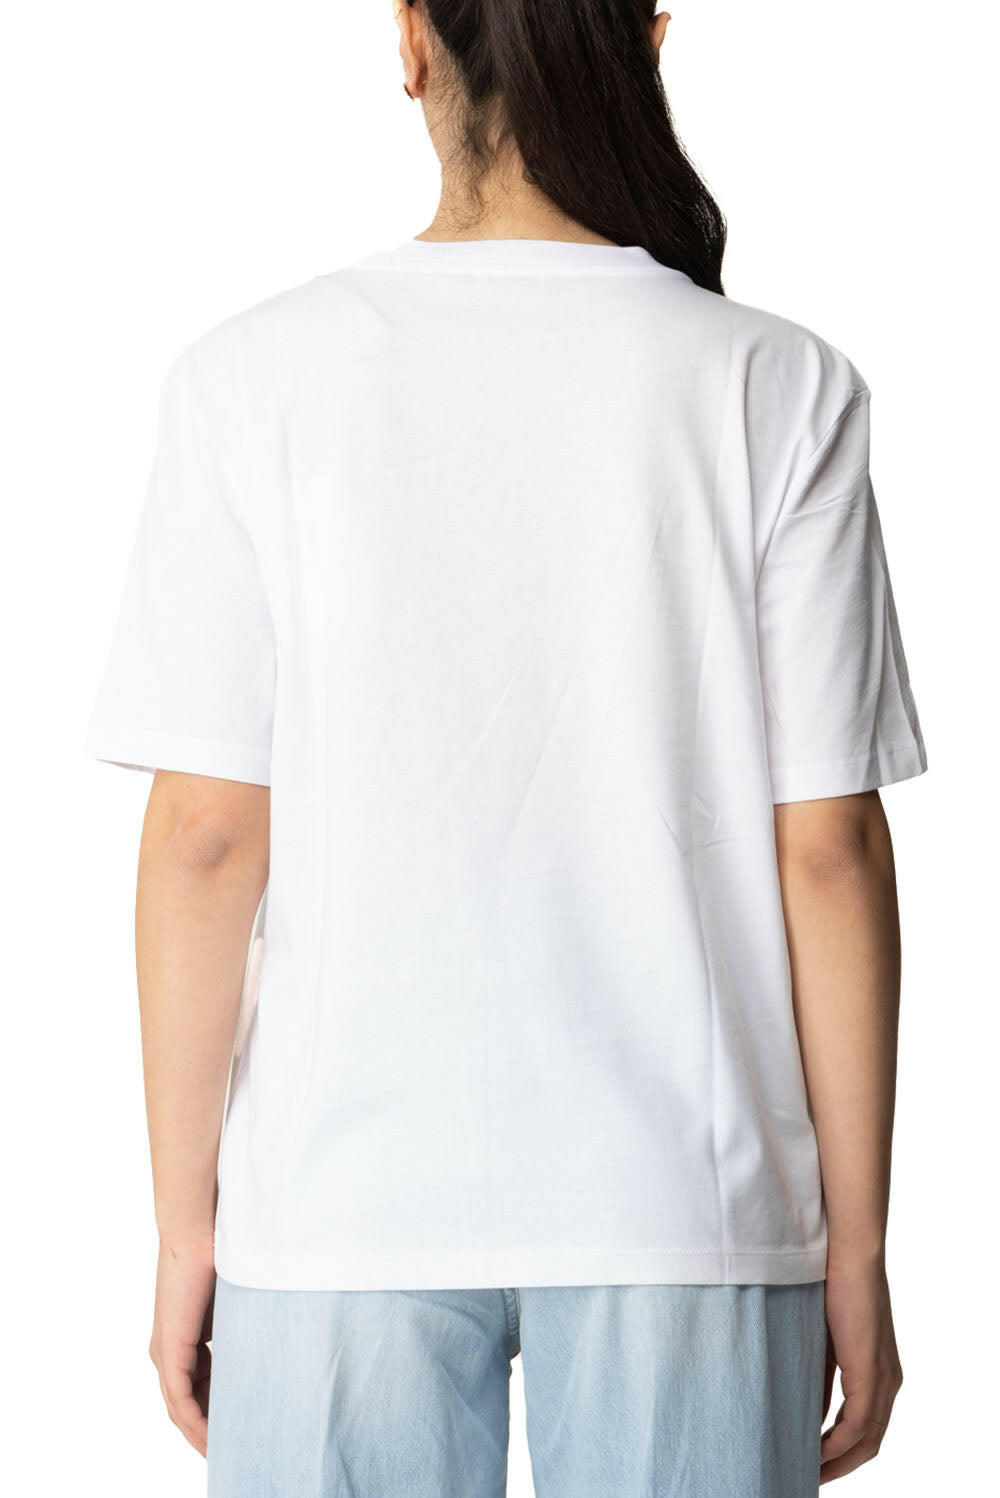  Patrizia Pepe T-shirt Logo Bianco Donna - 3